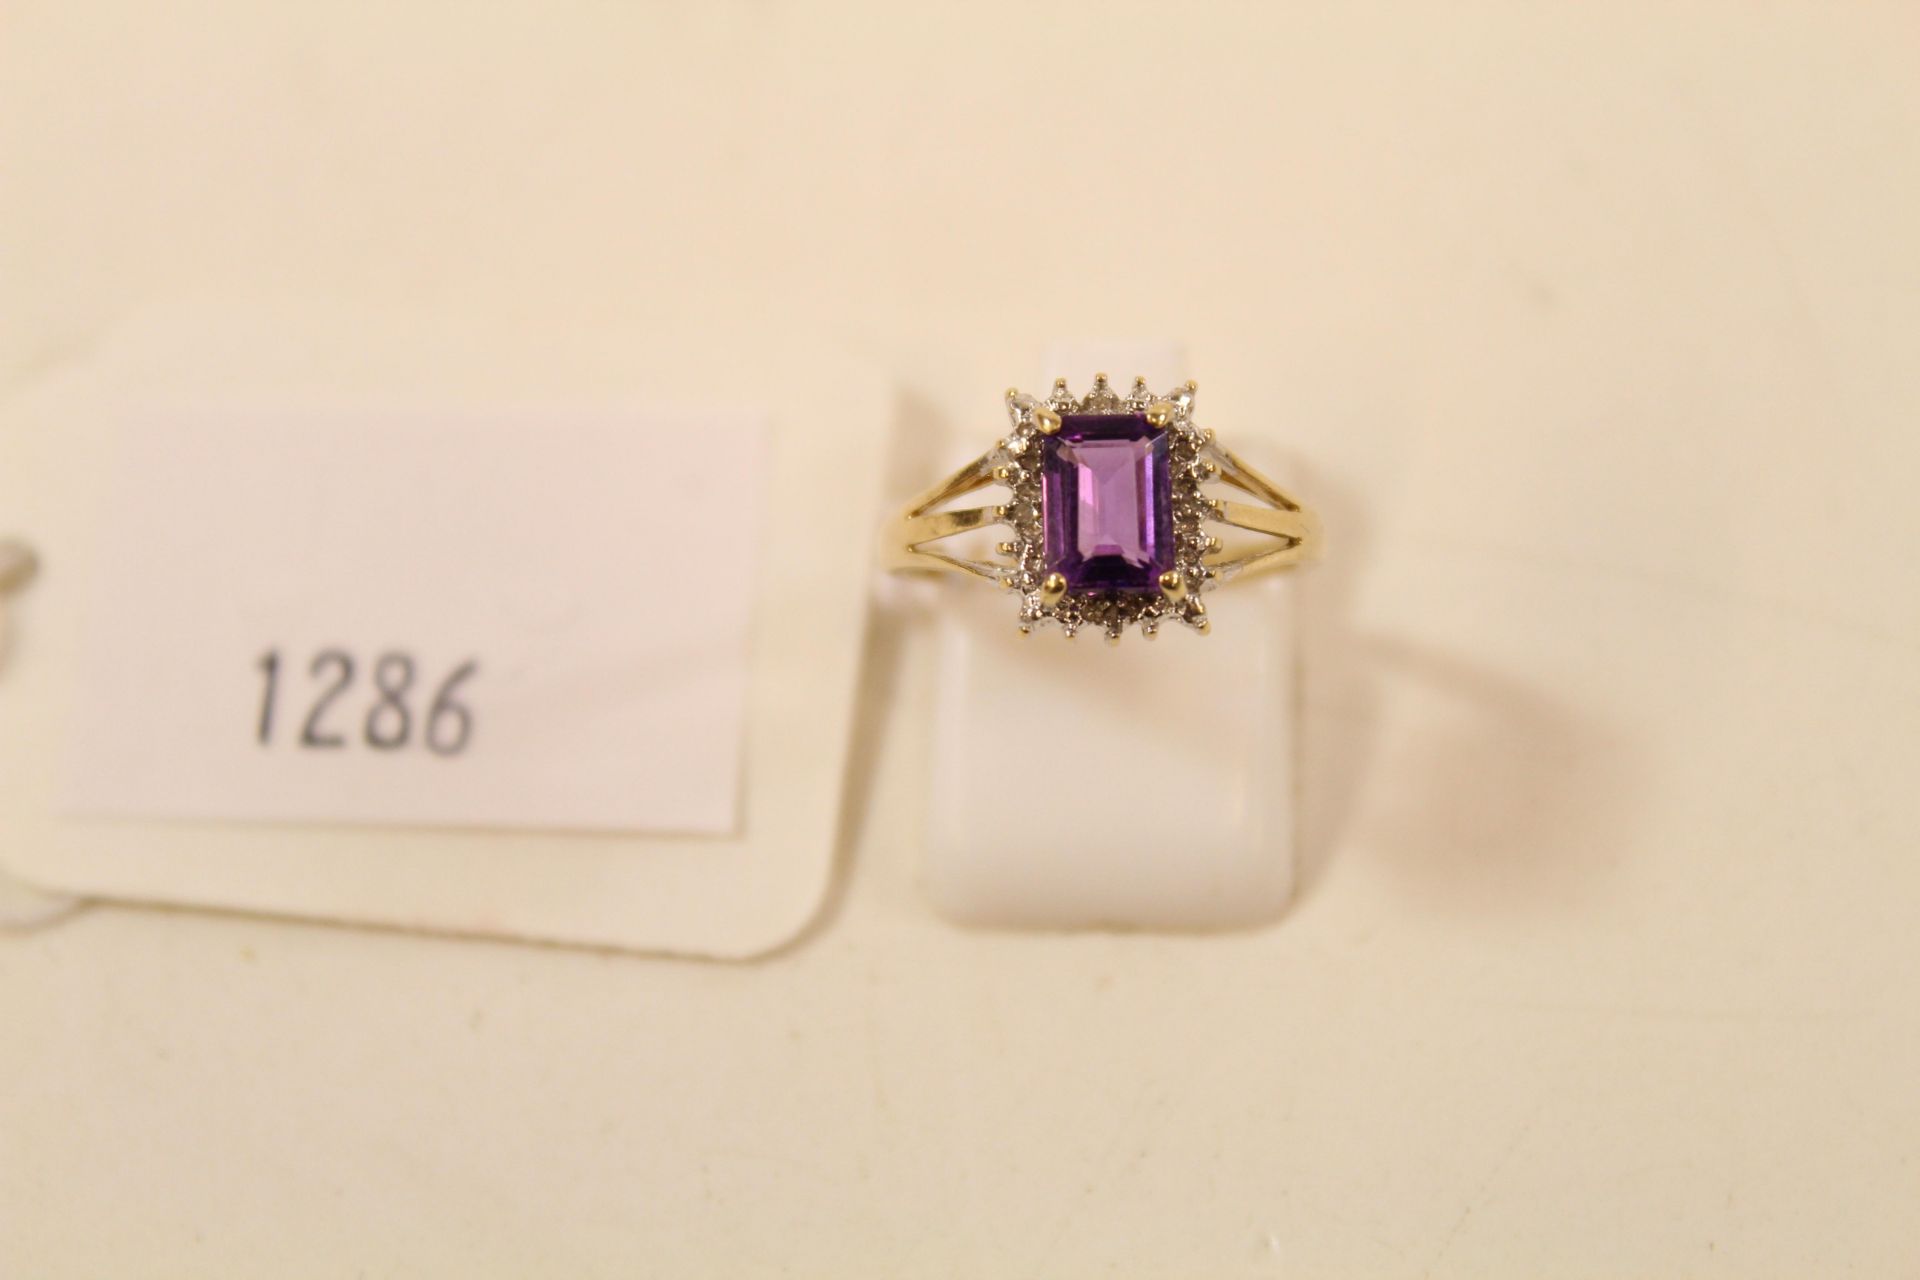 Vintage 9ct gold diamond & amethyst ring (size L) (est £60-£80)